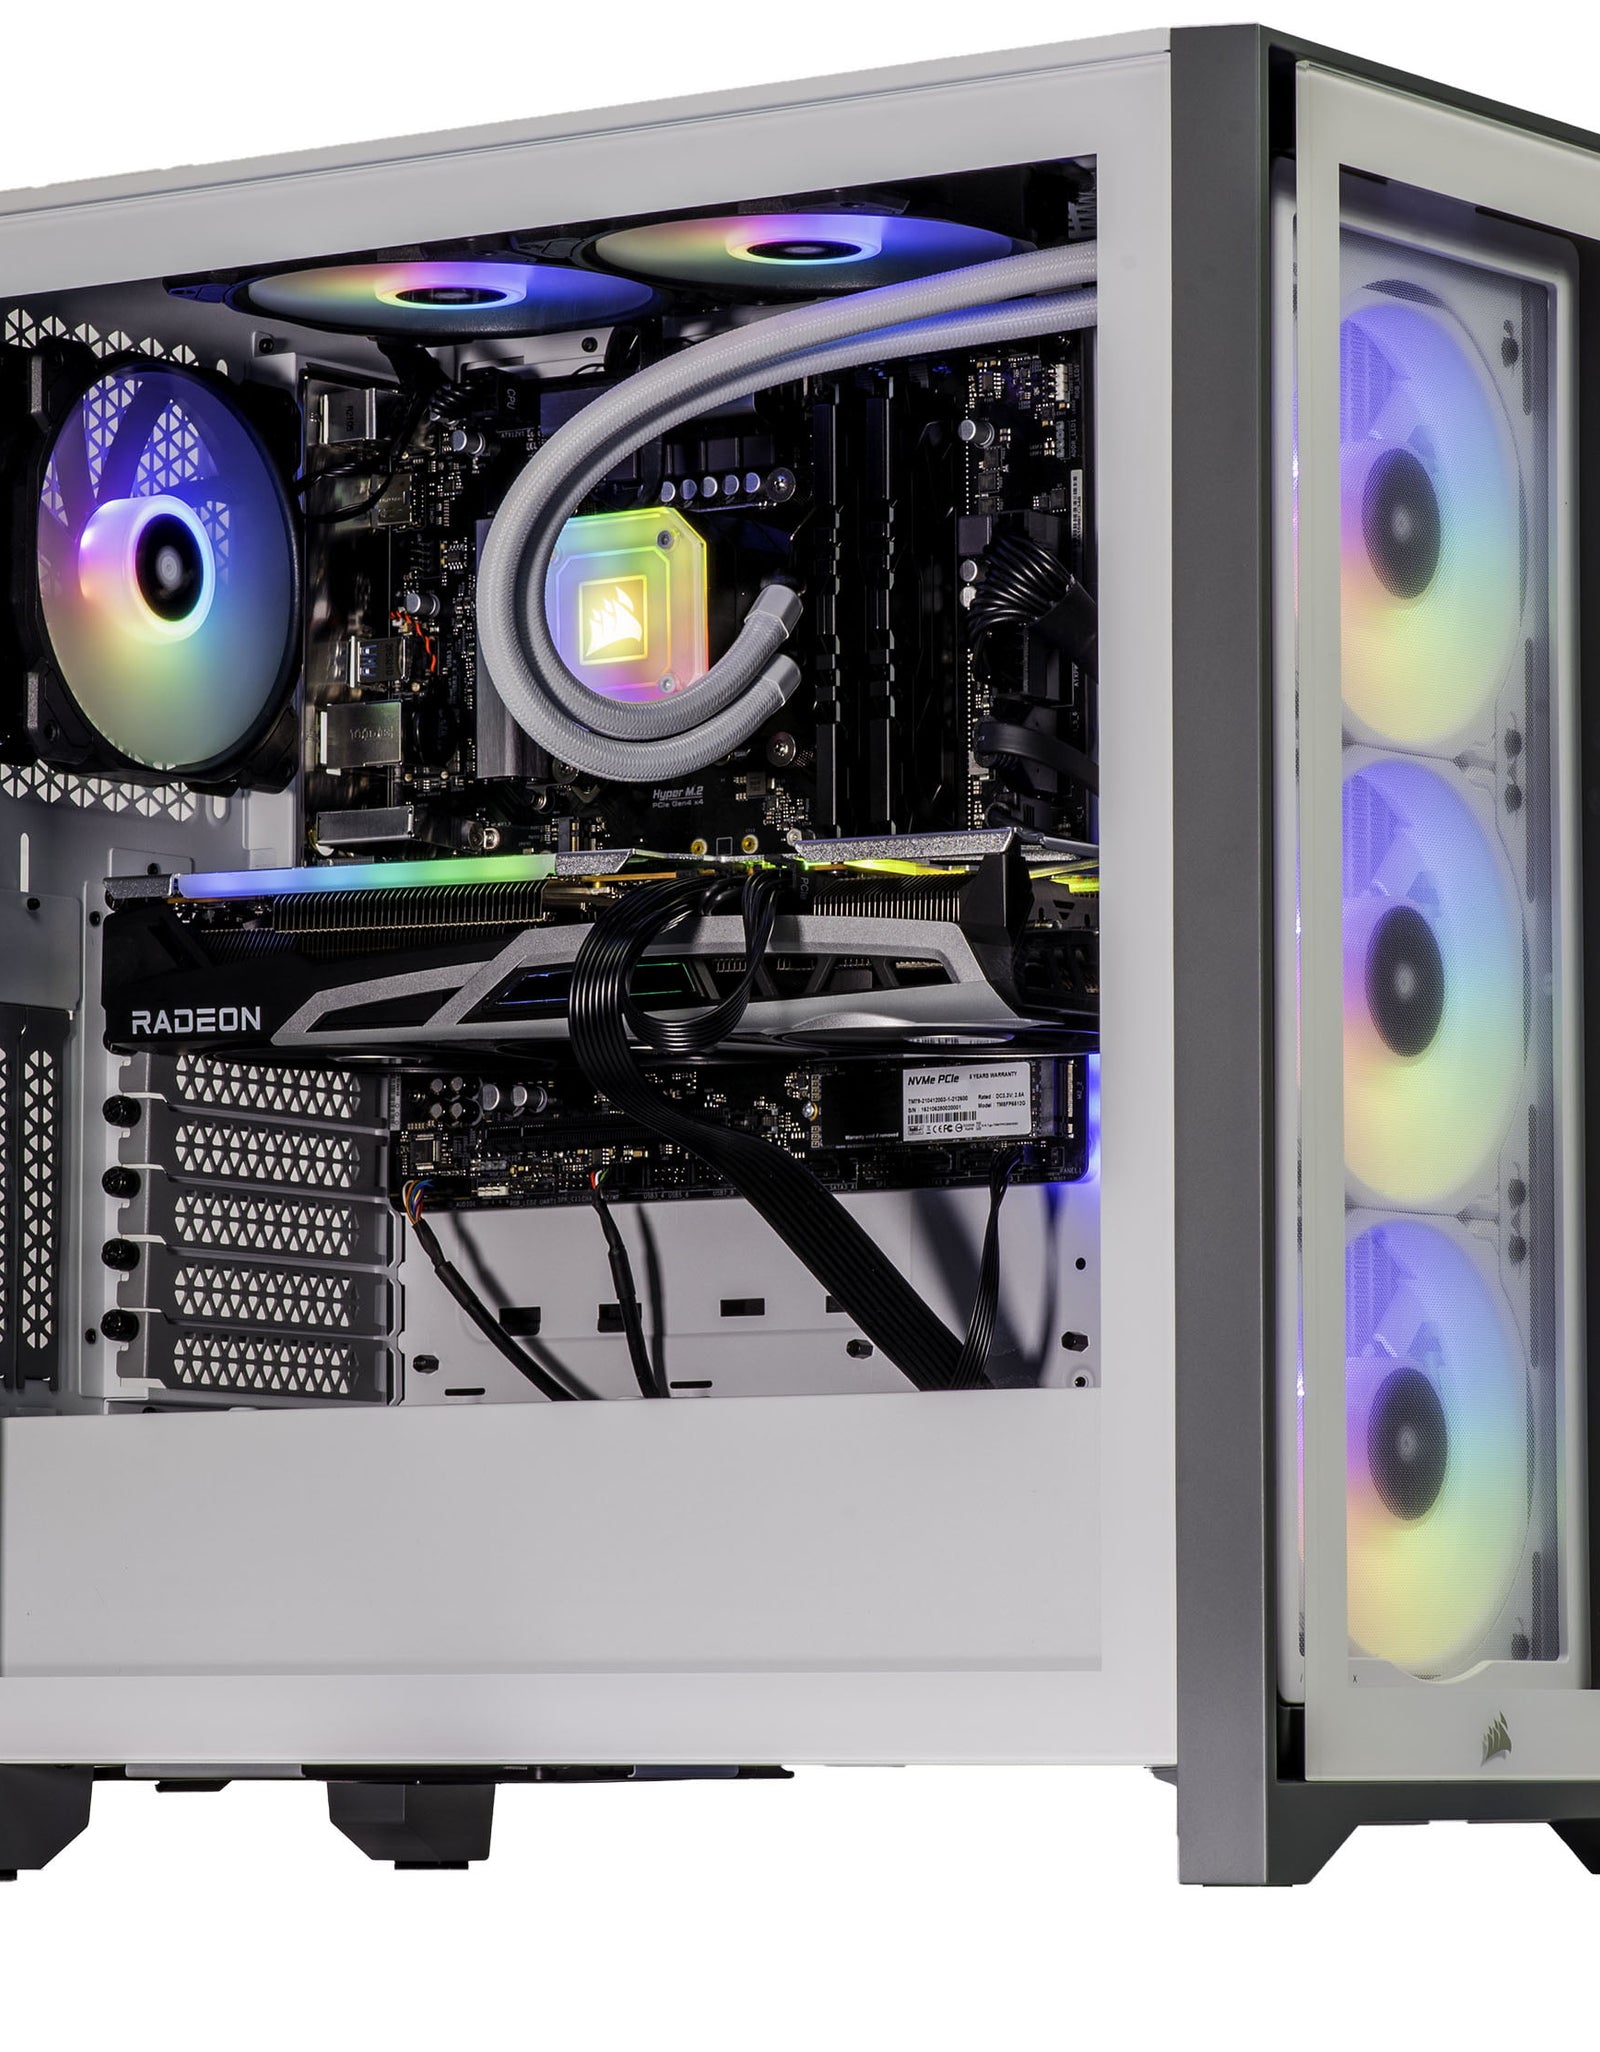 Argentux Custom Built Gaming Desktop PC White (Intel I7-10700F 8-Core, 16GB RAM, 512GB Pcie SSD + 1TB HDD (3.5), Radeon RX 6900 XT, Wifi, Bluetooth, 1Xusb 3.2, 1Xusb 3.0, 1Xhdmi, Win 10 Home)